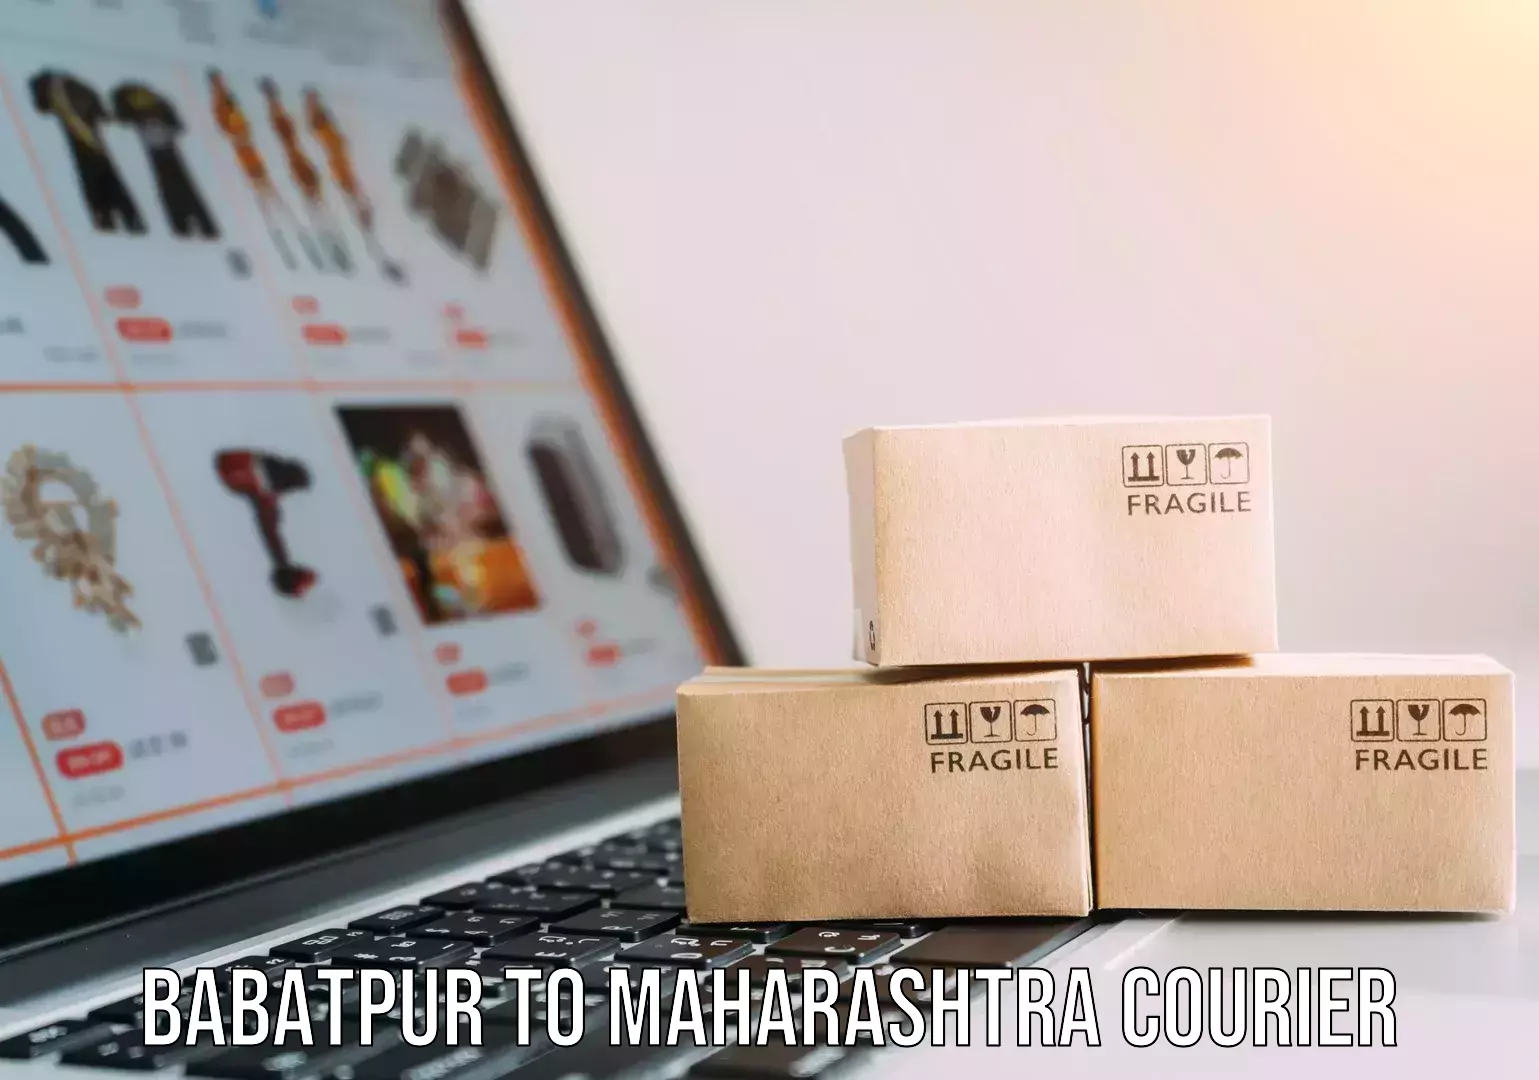 International courier networks Babatpur to Maharashtra